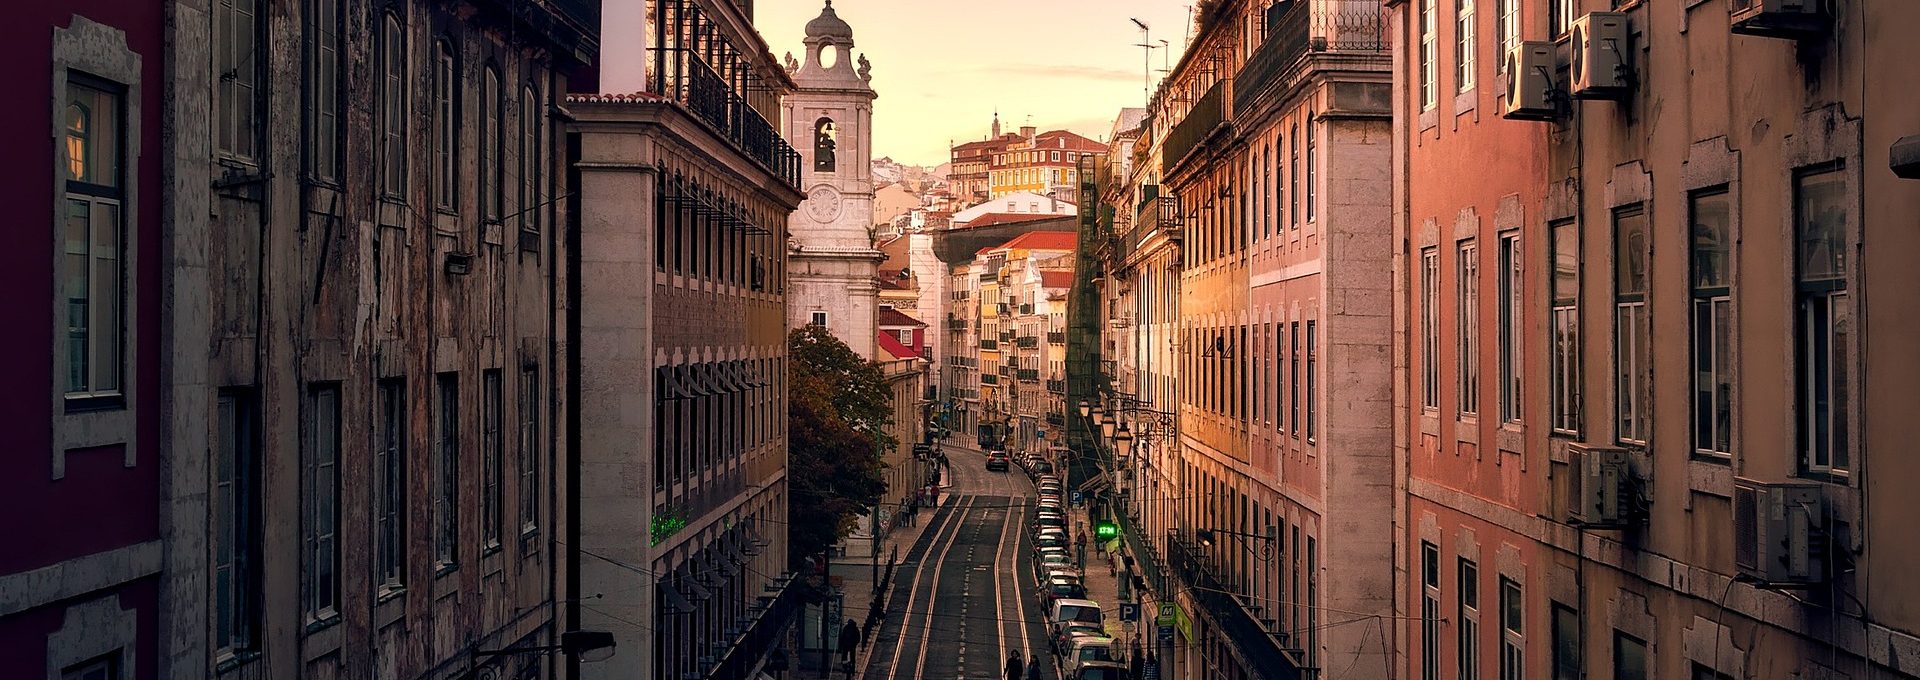 Ruas de Portugal.